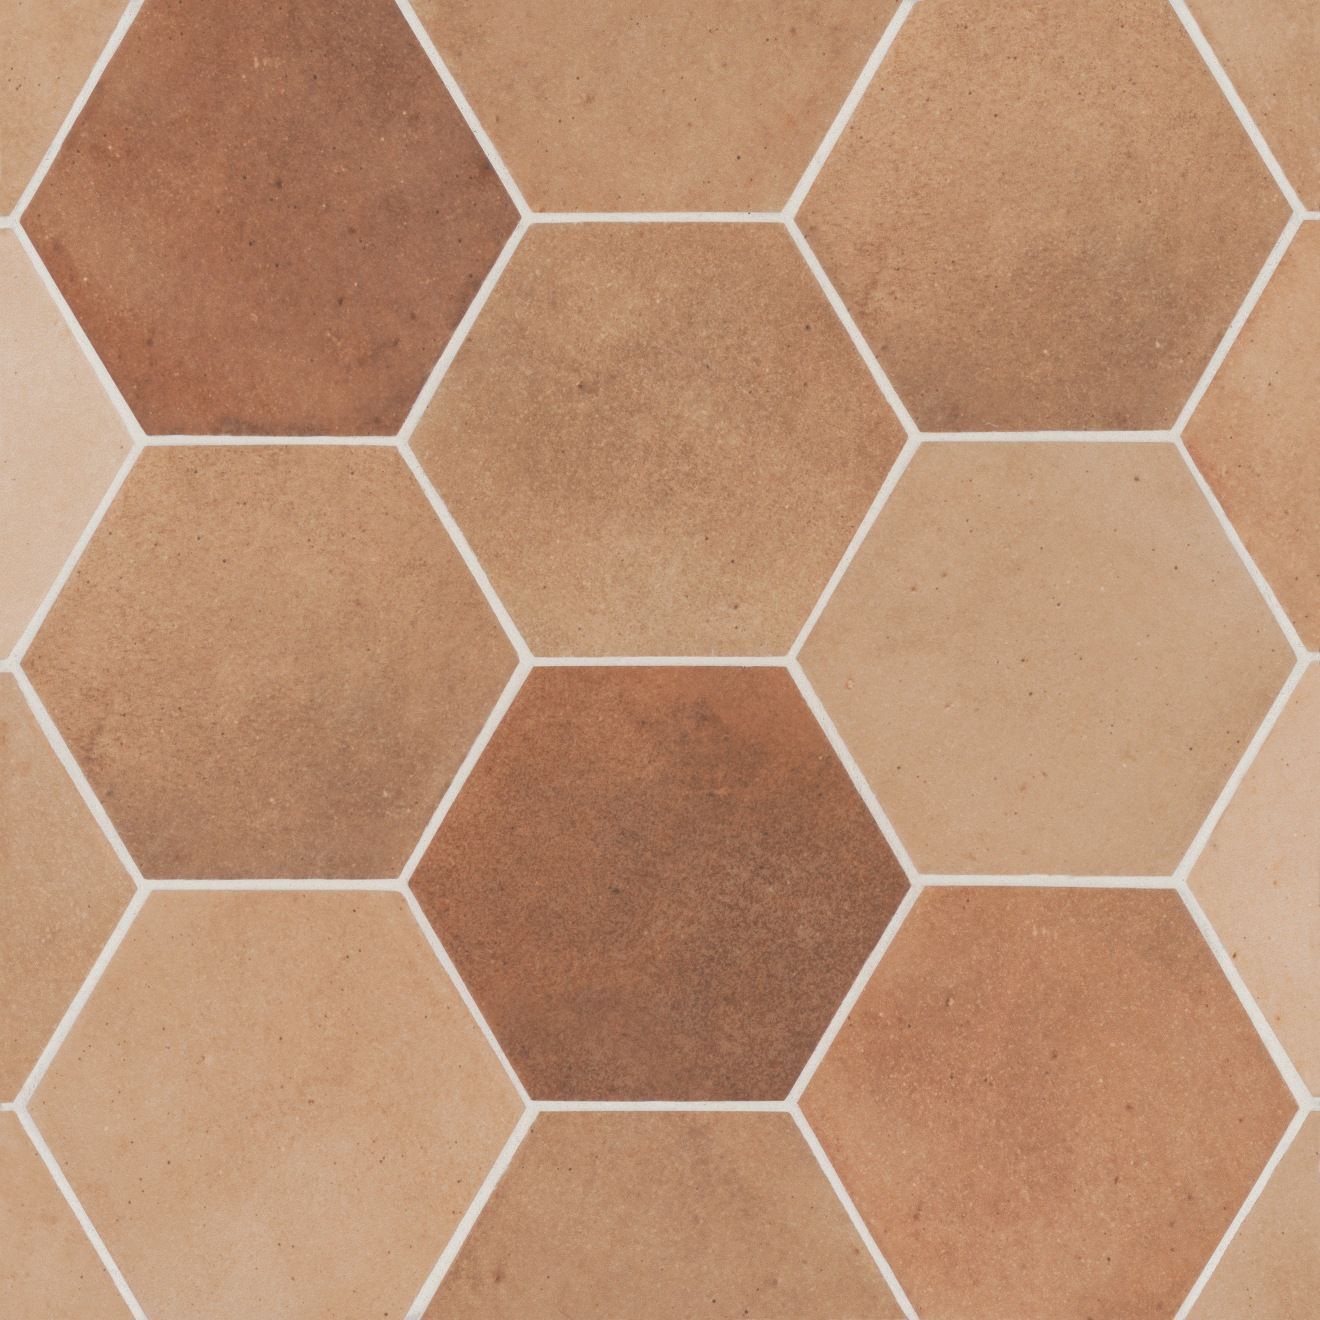 Celine 4" Hexagon Matte Porcelain Floor & Wall Tile in Cotto | Bedrosians Tile & Stone